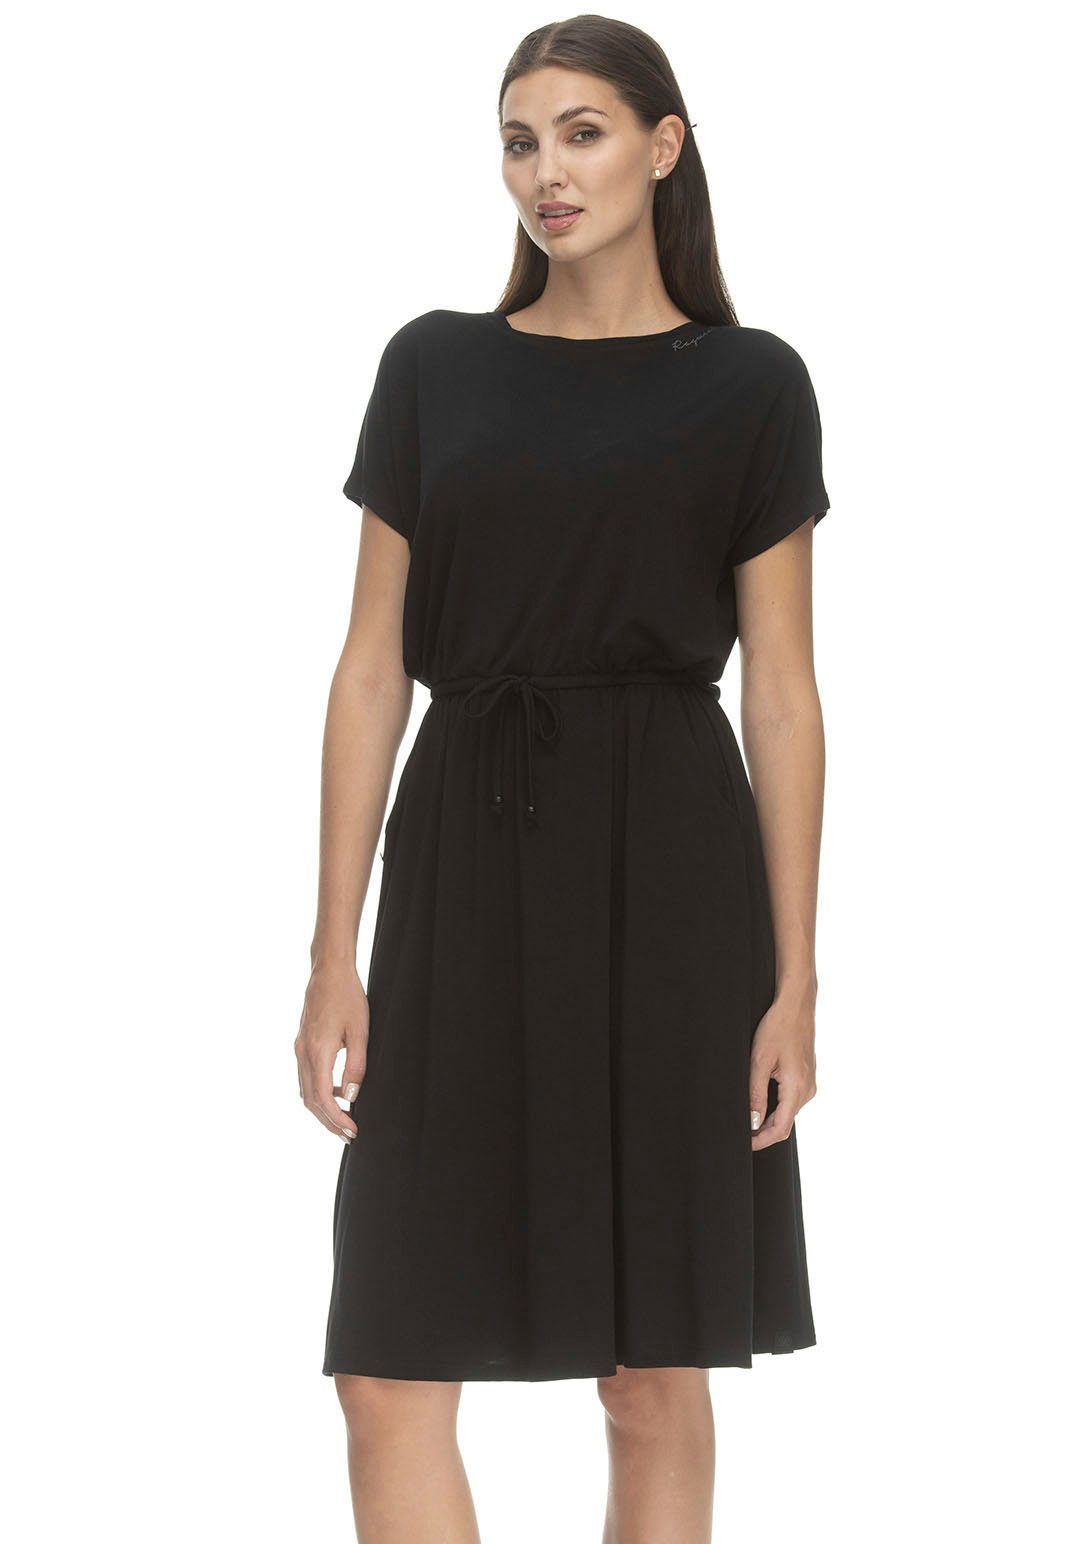 Jerseykleid DRESS schwarz PECORI Ragwear